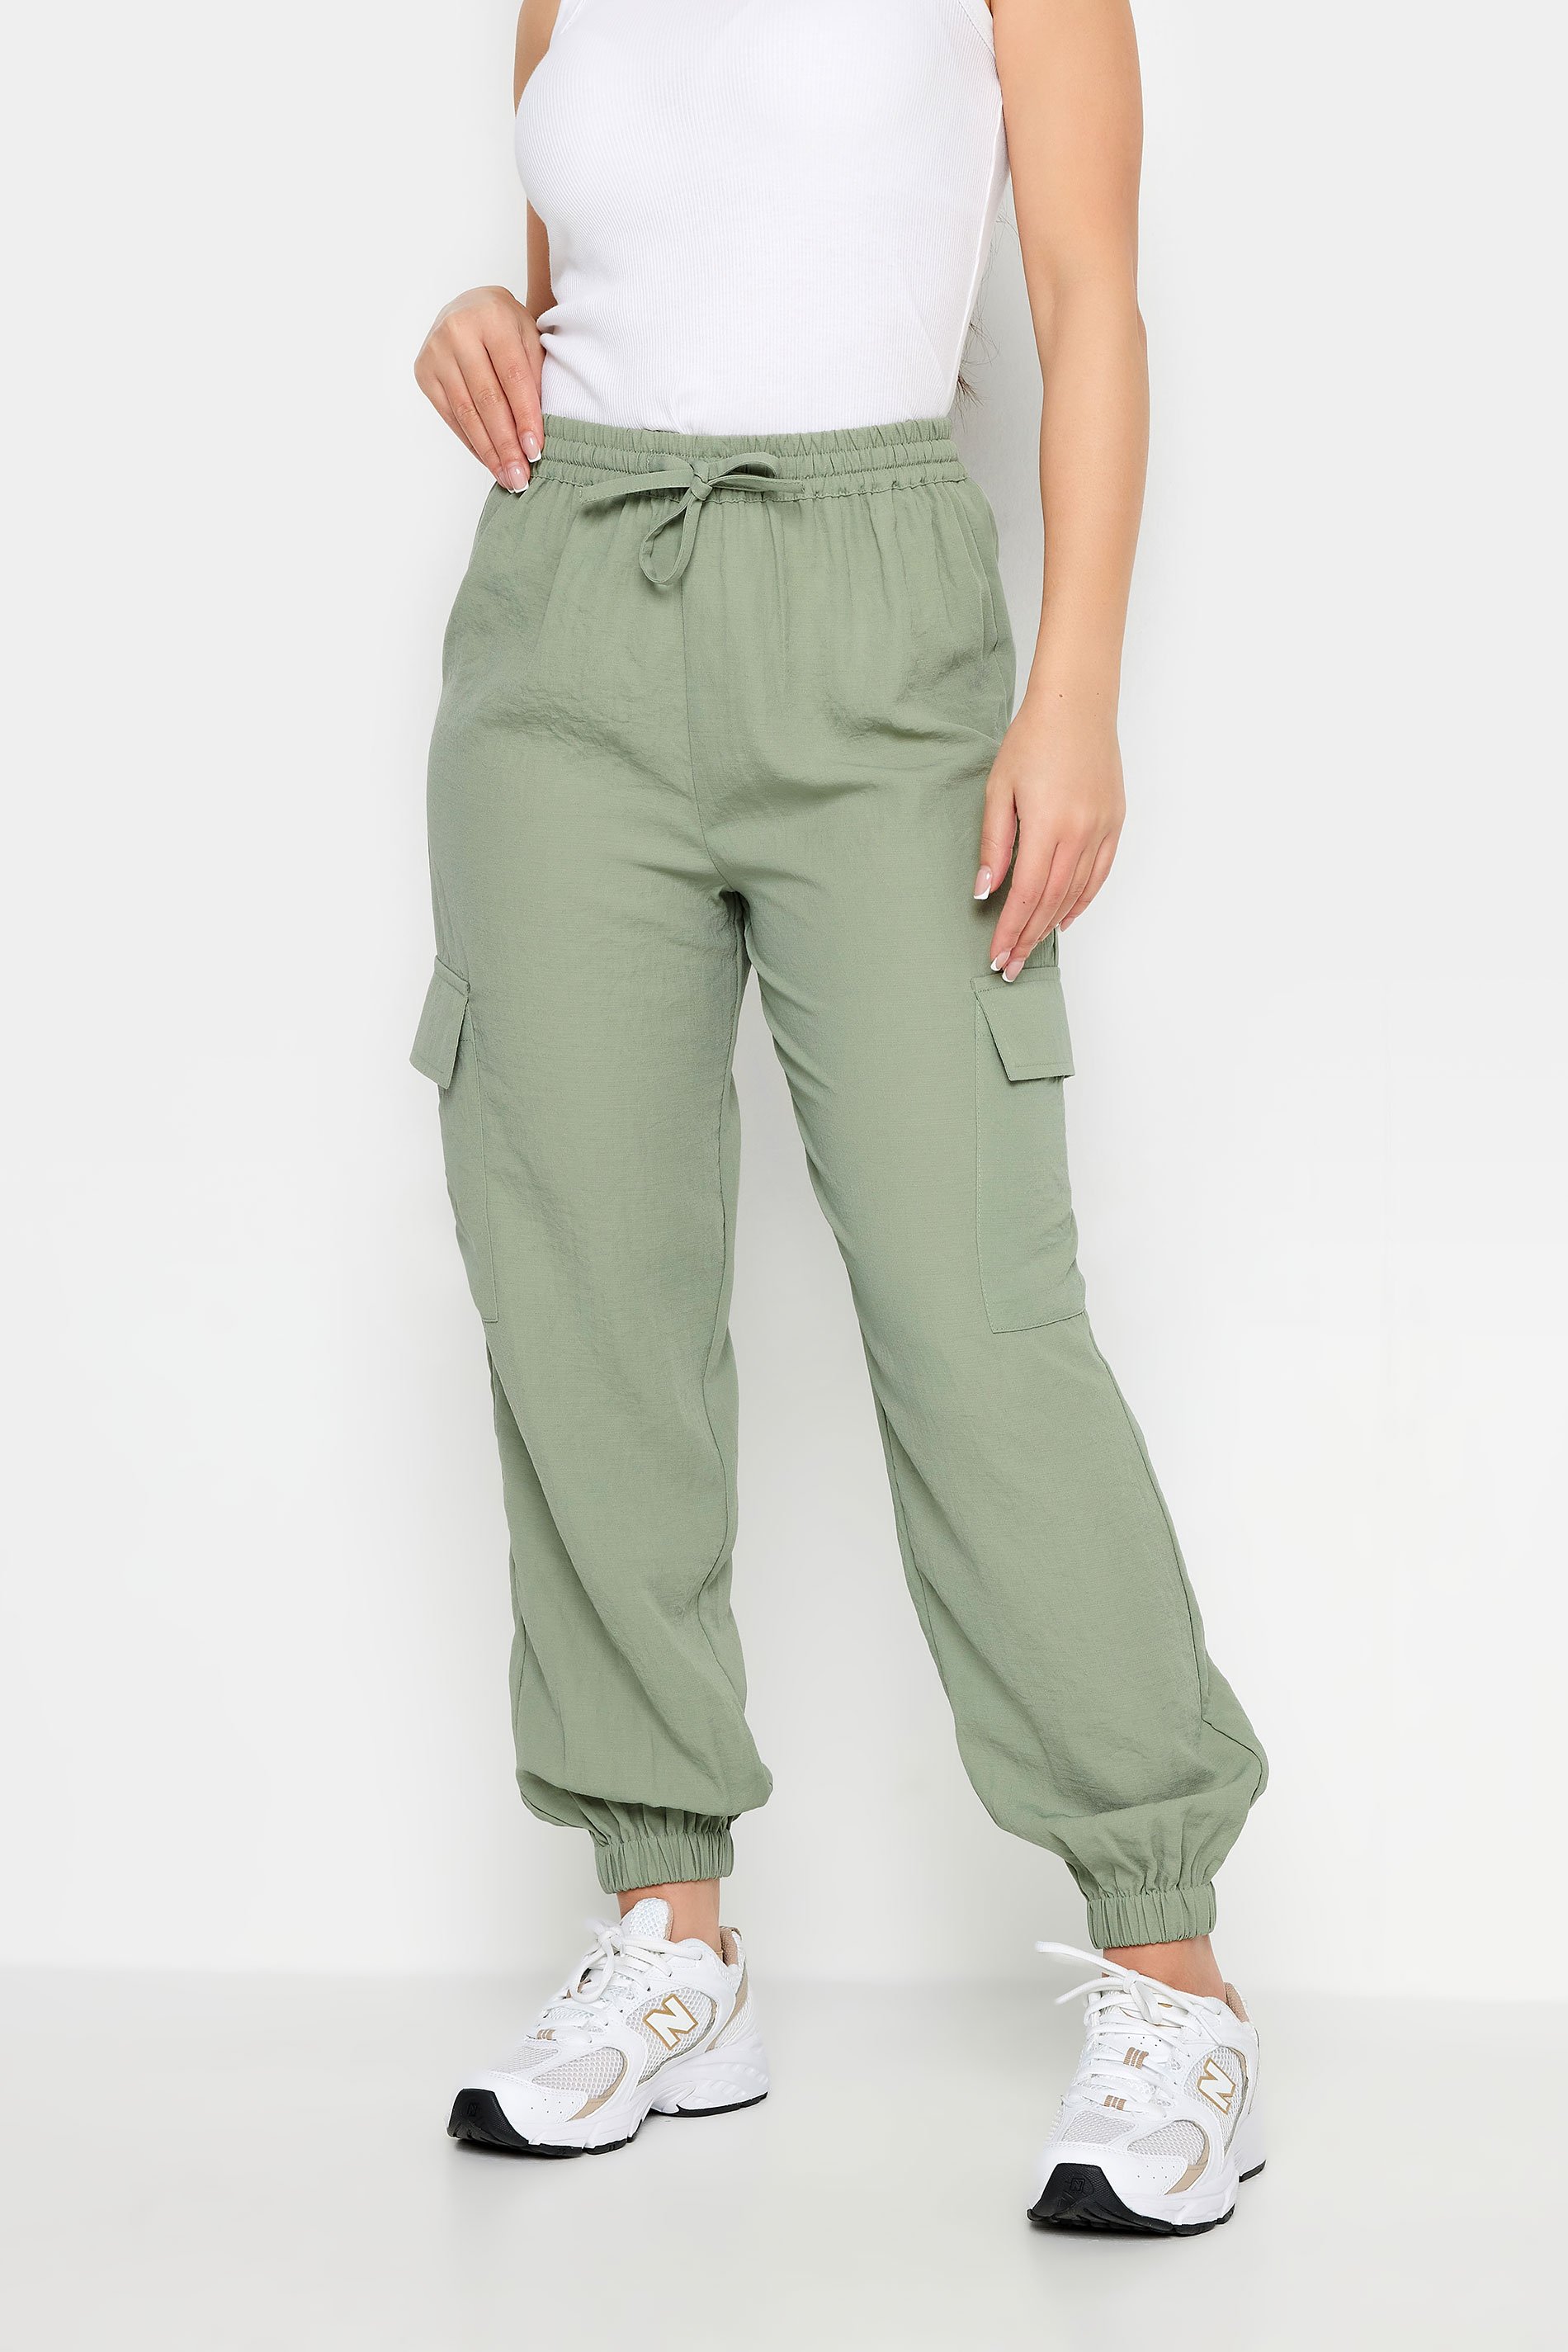 PixieGirl Petite Womens Sage Green Cuffed Cargo Trousers | PixieGirl 2